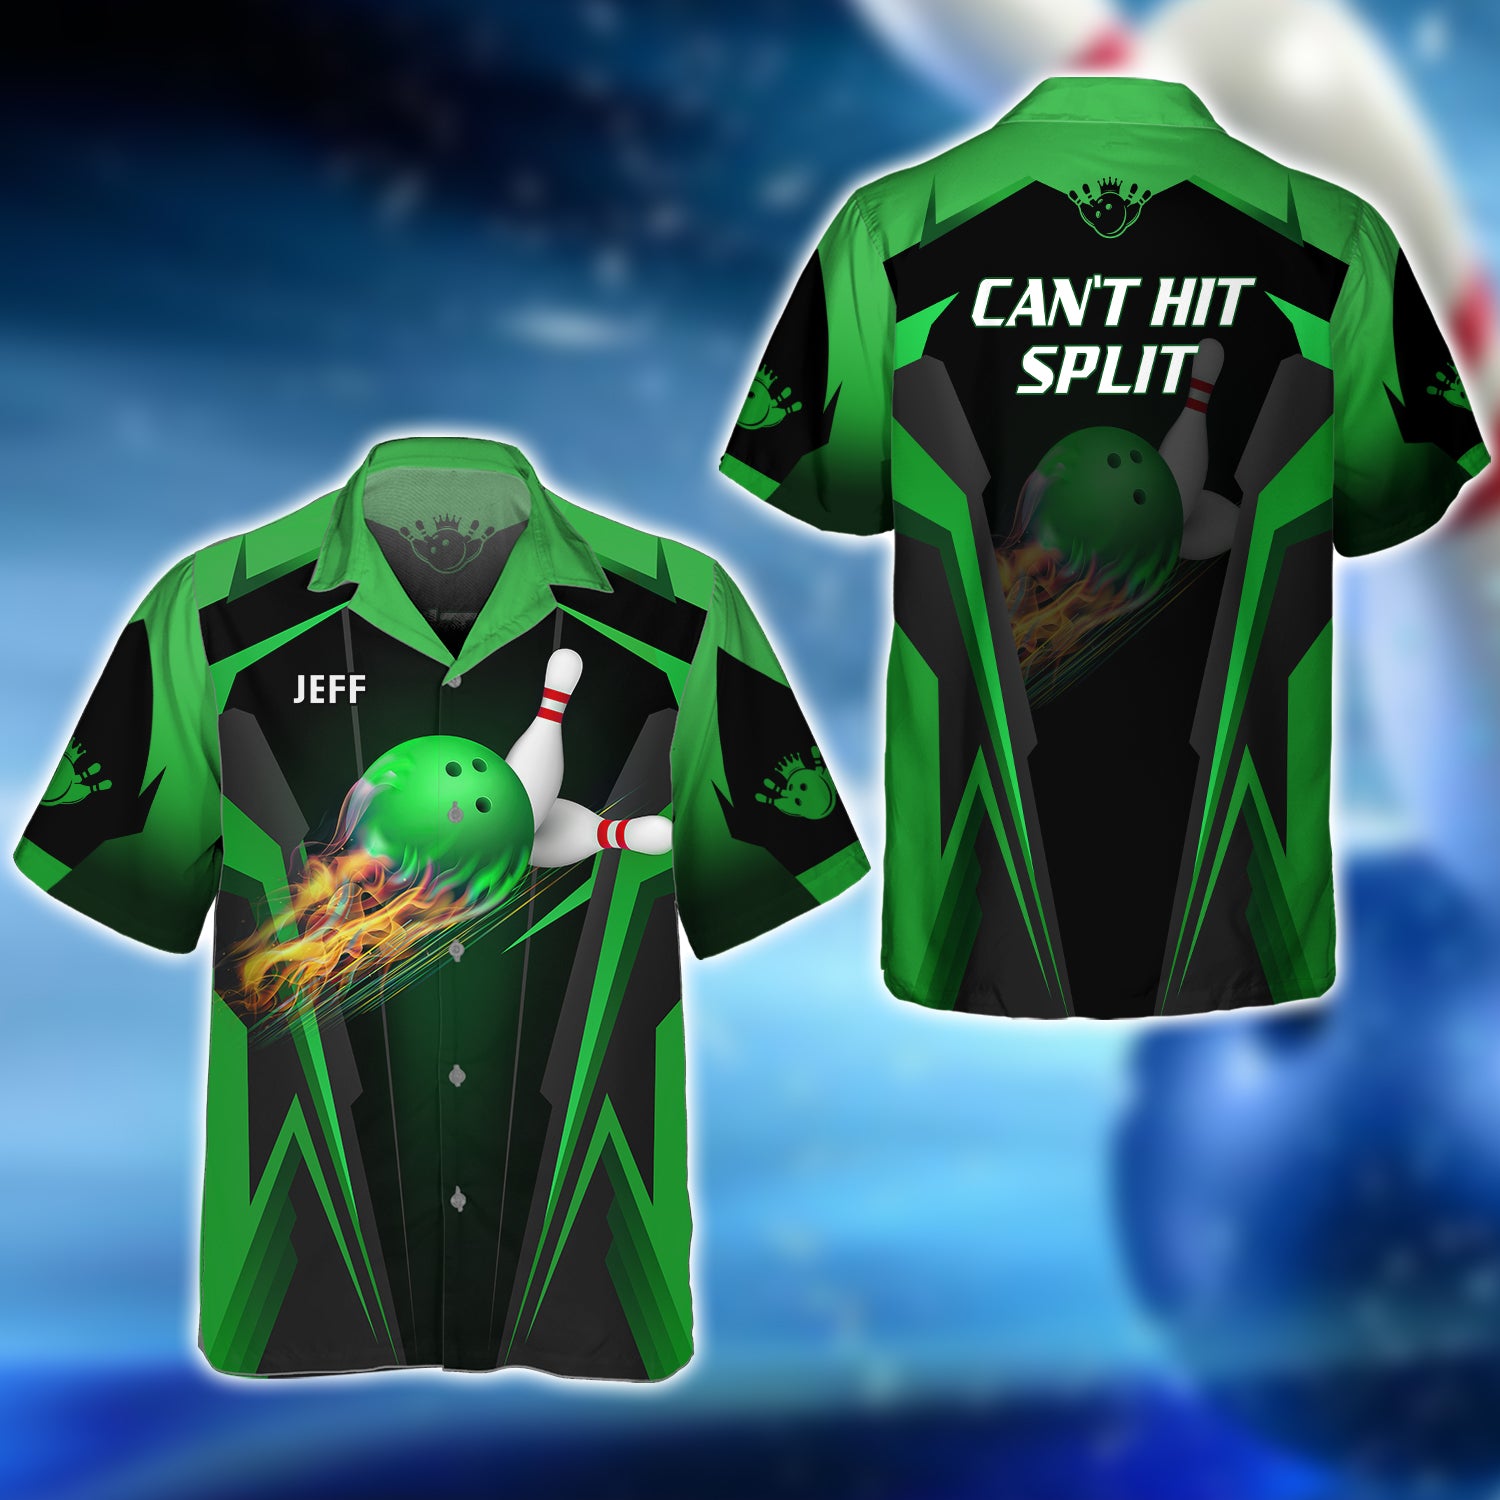 JEFF - The Green Bowling Ball in Flames 3D Shirt - QB95